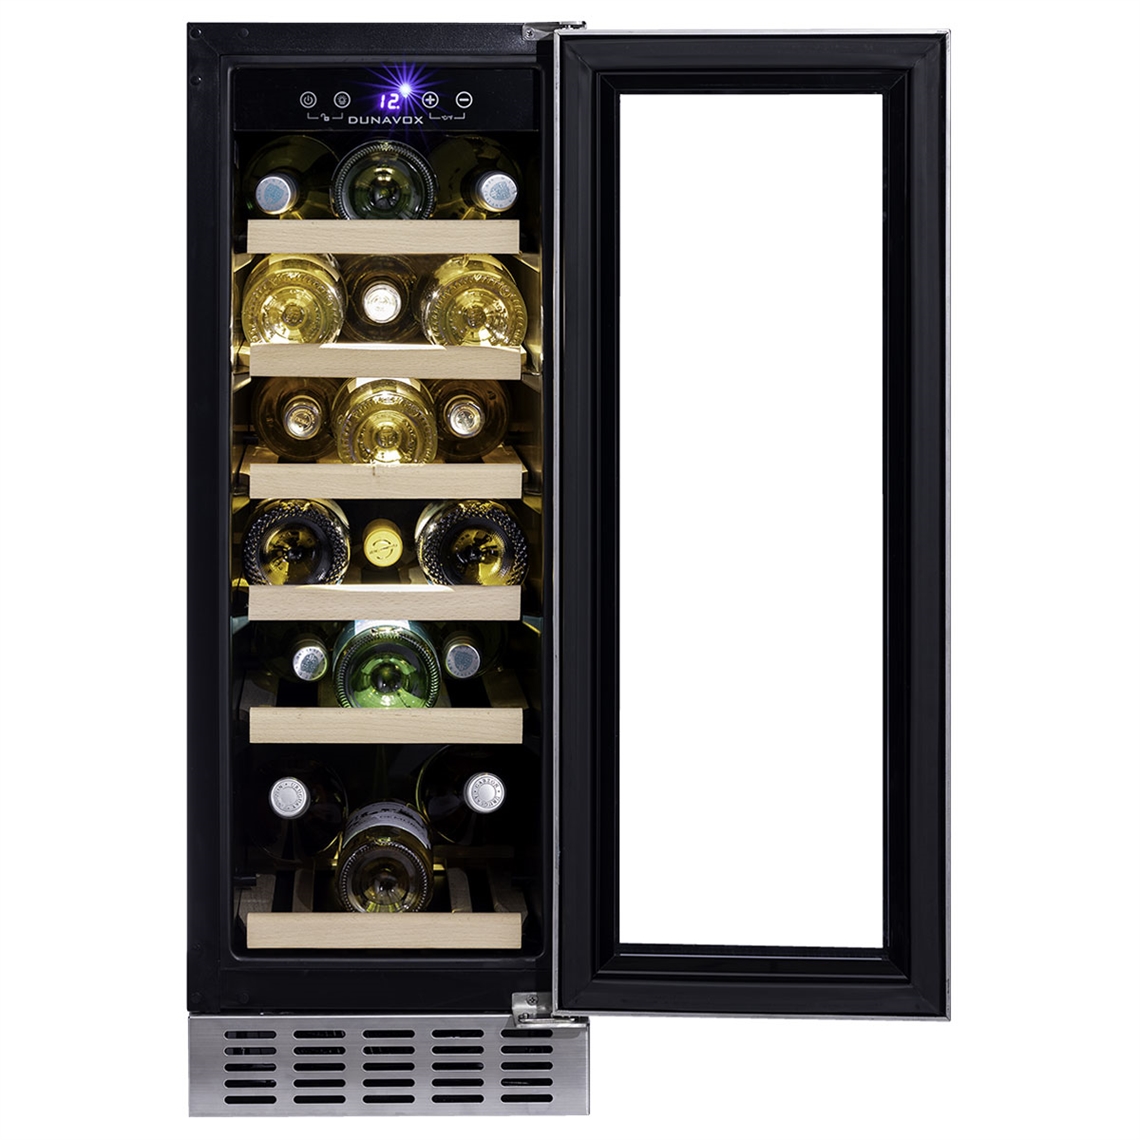 Dunavox Wine Cabinet Flow - Single Temperature Built-In Under Counter - Stainless Steel DAUF-19.58SS